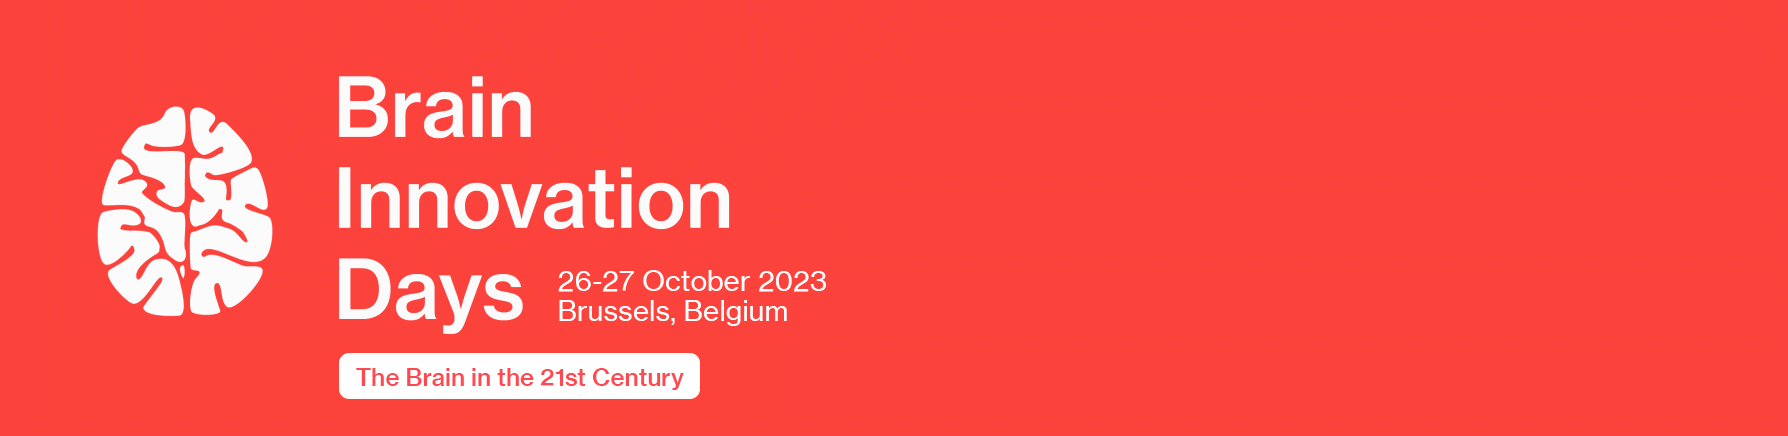 Brain innovation days in Brussels 26-27 October